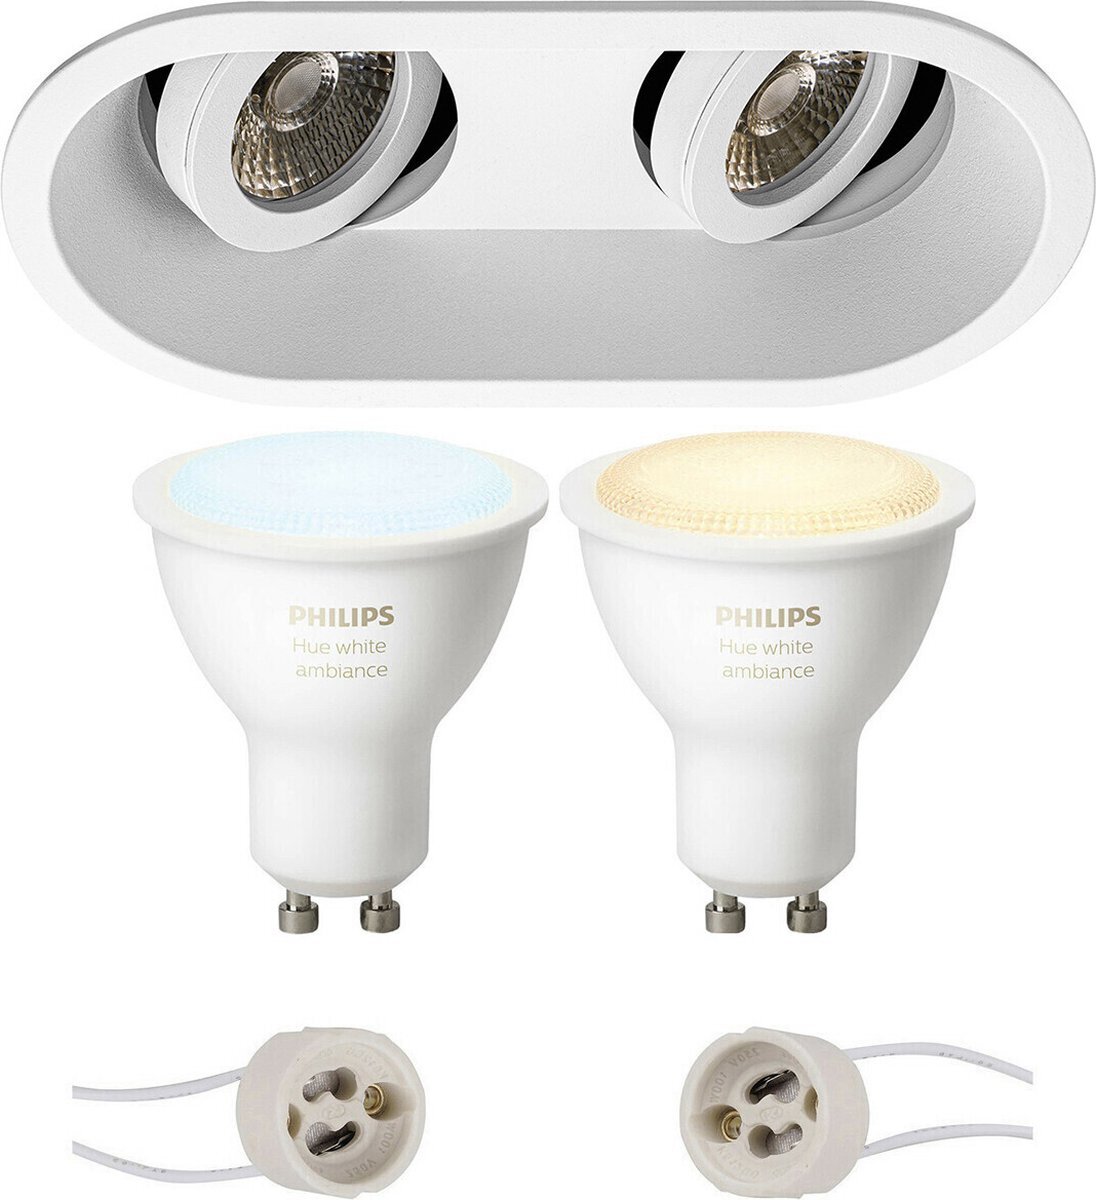 Qualu Proma Zano Pro - Inbouw Ovaal Dubbel - Mat Wit - Kantelbaar - 185x93mm - Philips Hue - LED Spot Set GU10 - White Ambiance - Bluetooth